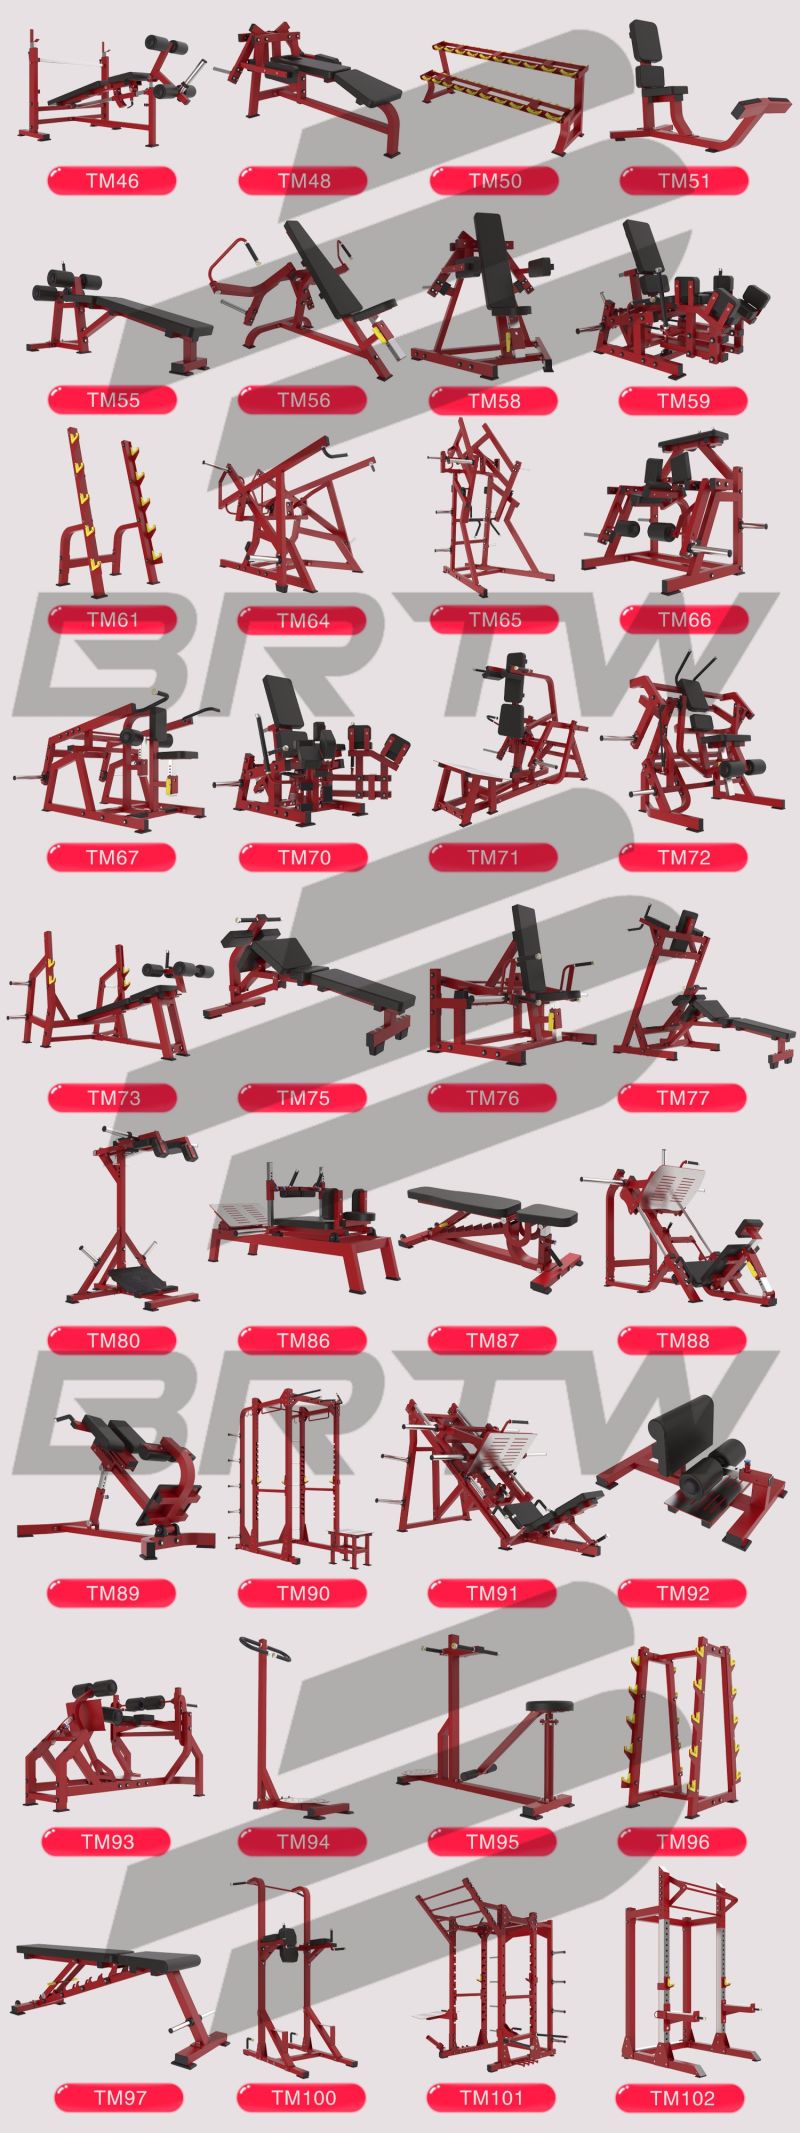 China Gym Club Bench Press/Gym Bench/ Weight Bench